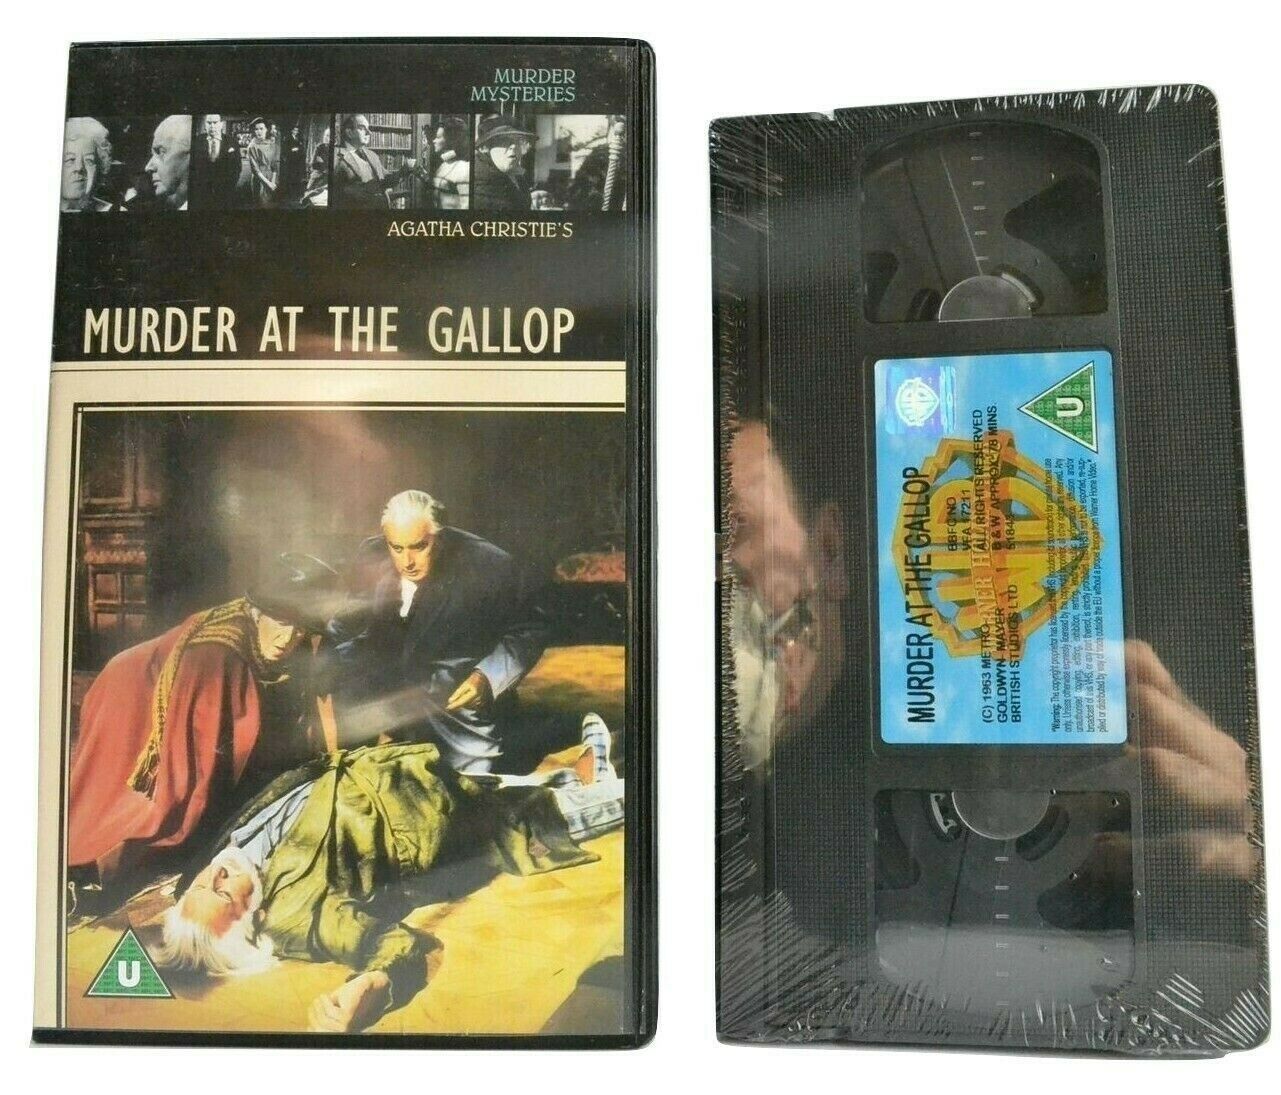 Murder At The Gallop; [Agatha Christie]: Drama (New Sealed) Robert Morley - VHS-